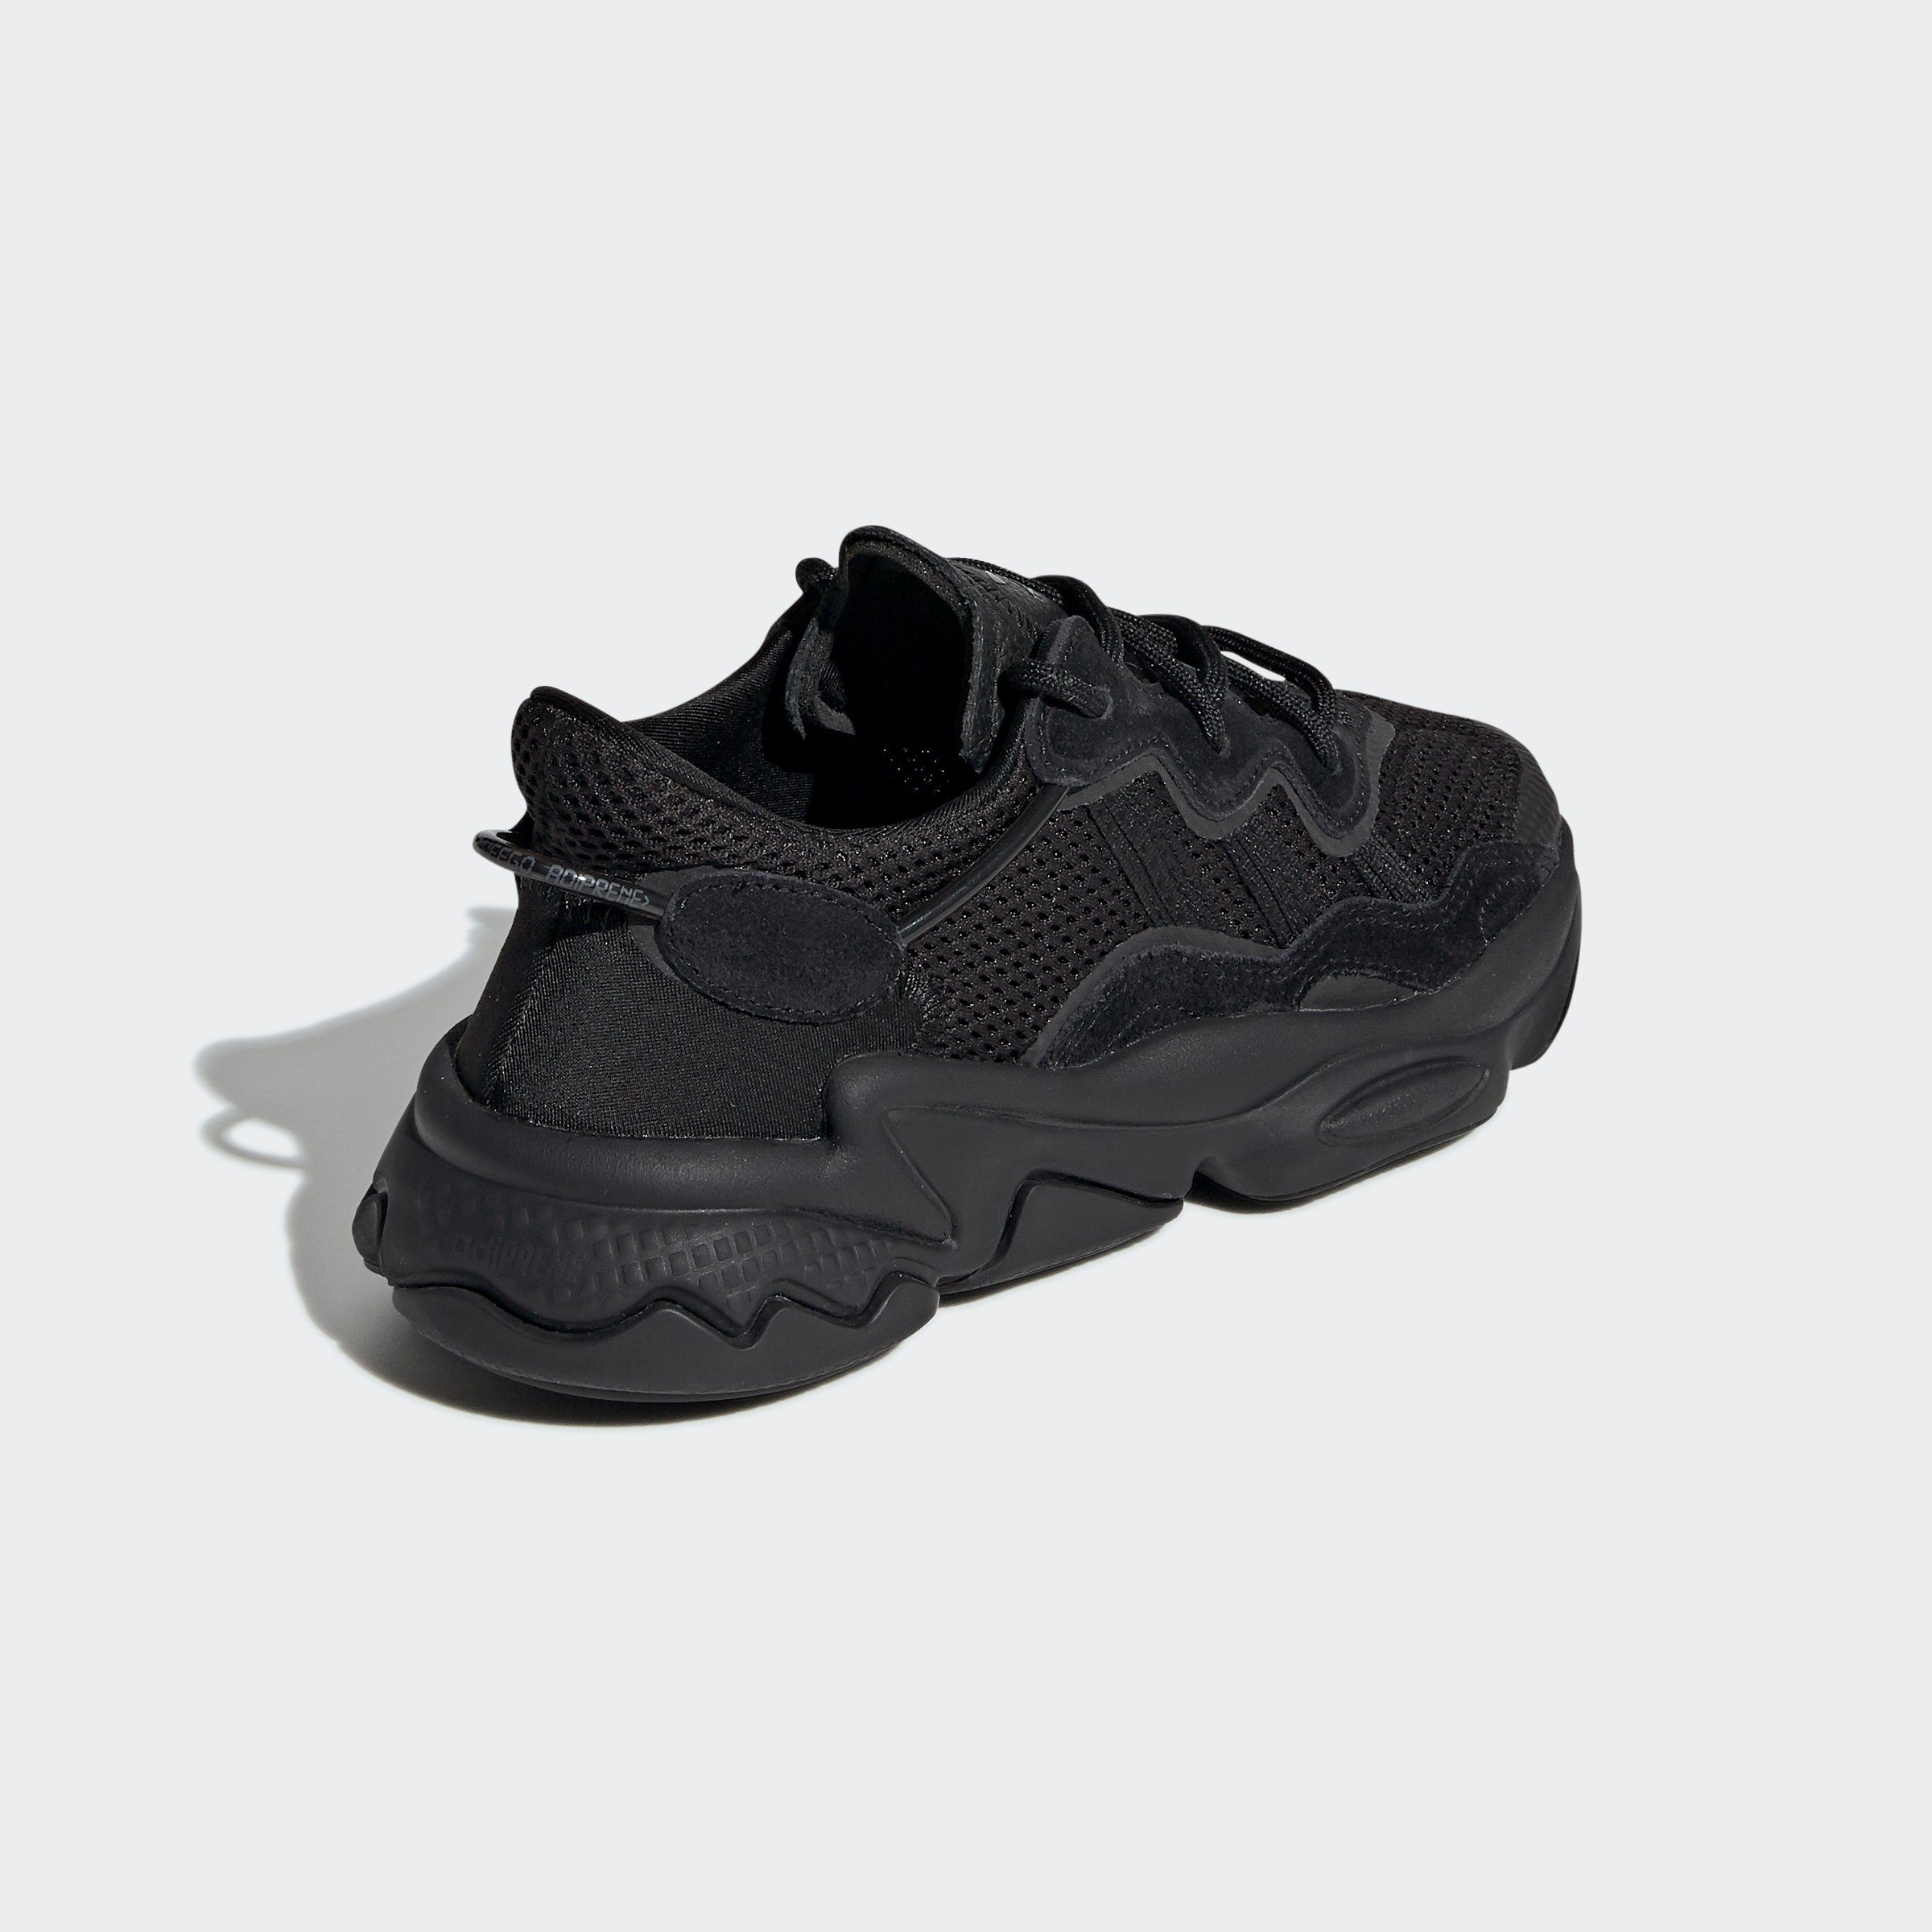 Originals Trace OZWEEGO / Core Metallic / Grey Sneaker Black adidas Core Black